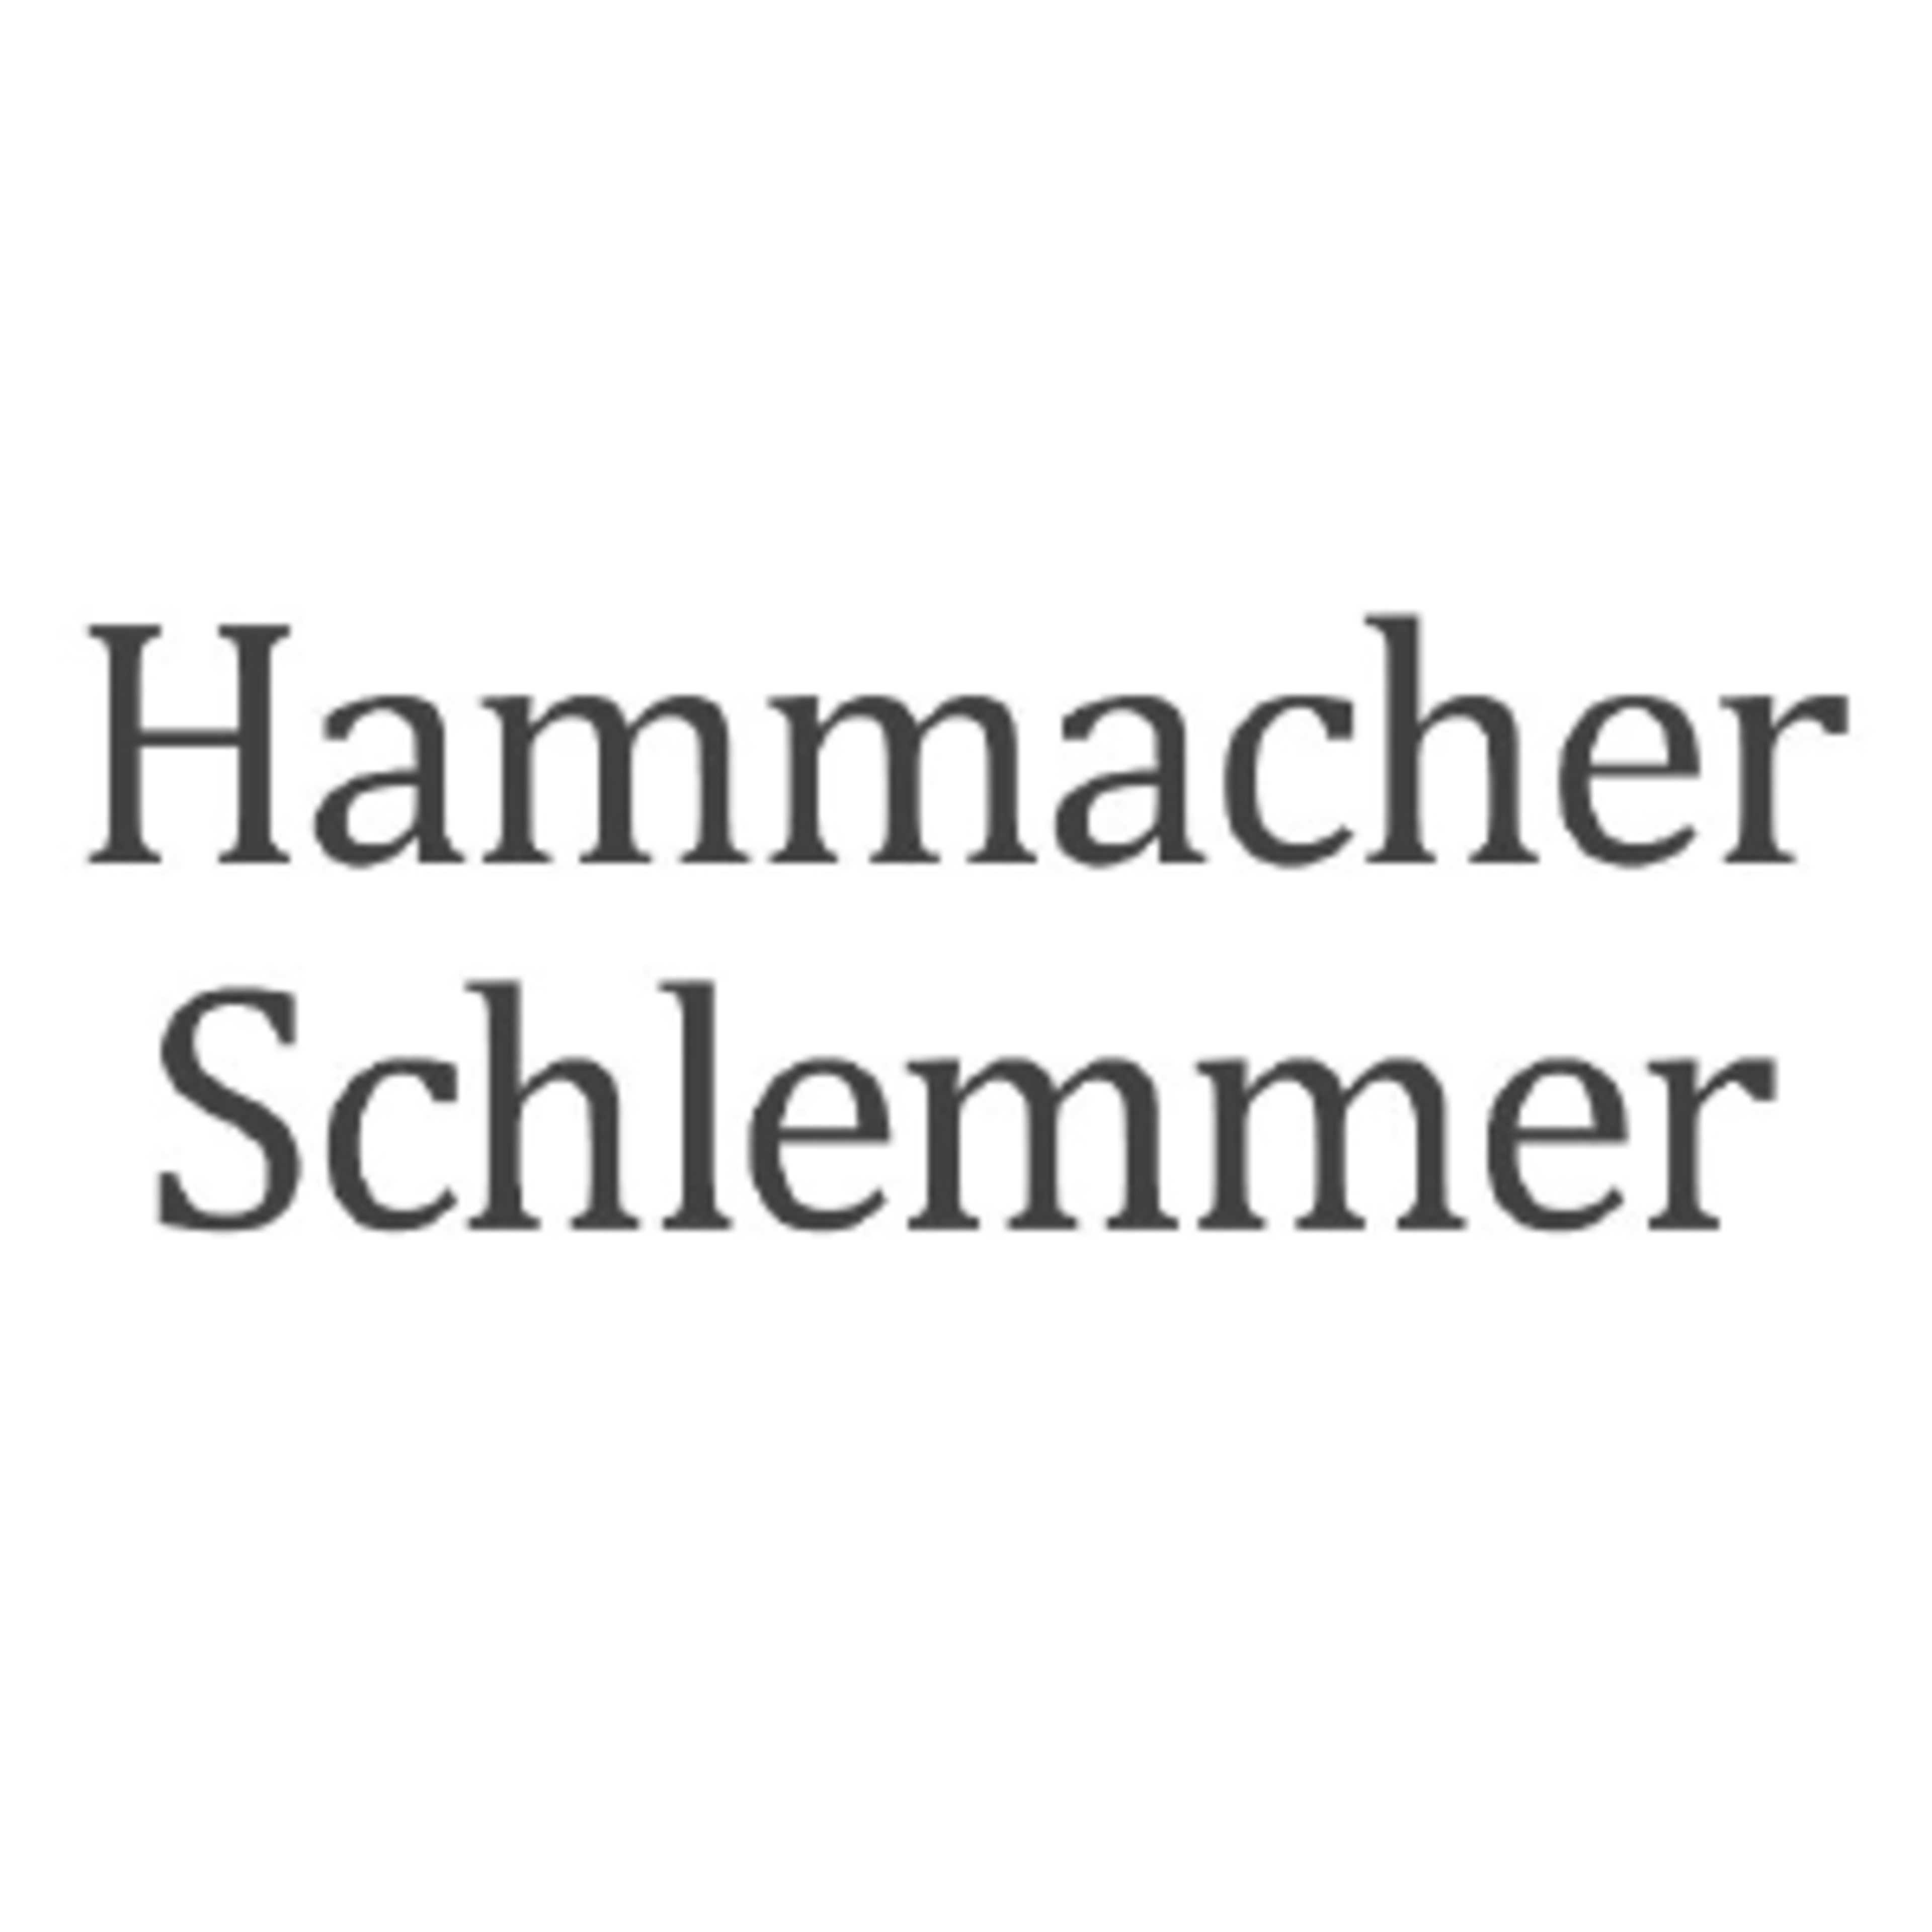 Hammacher SchlemmerCode